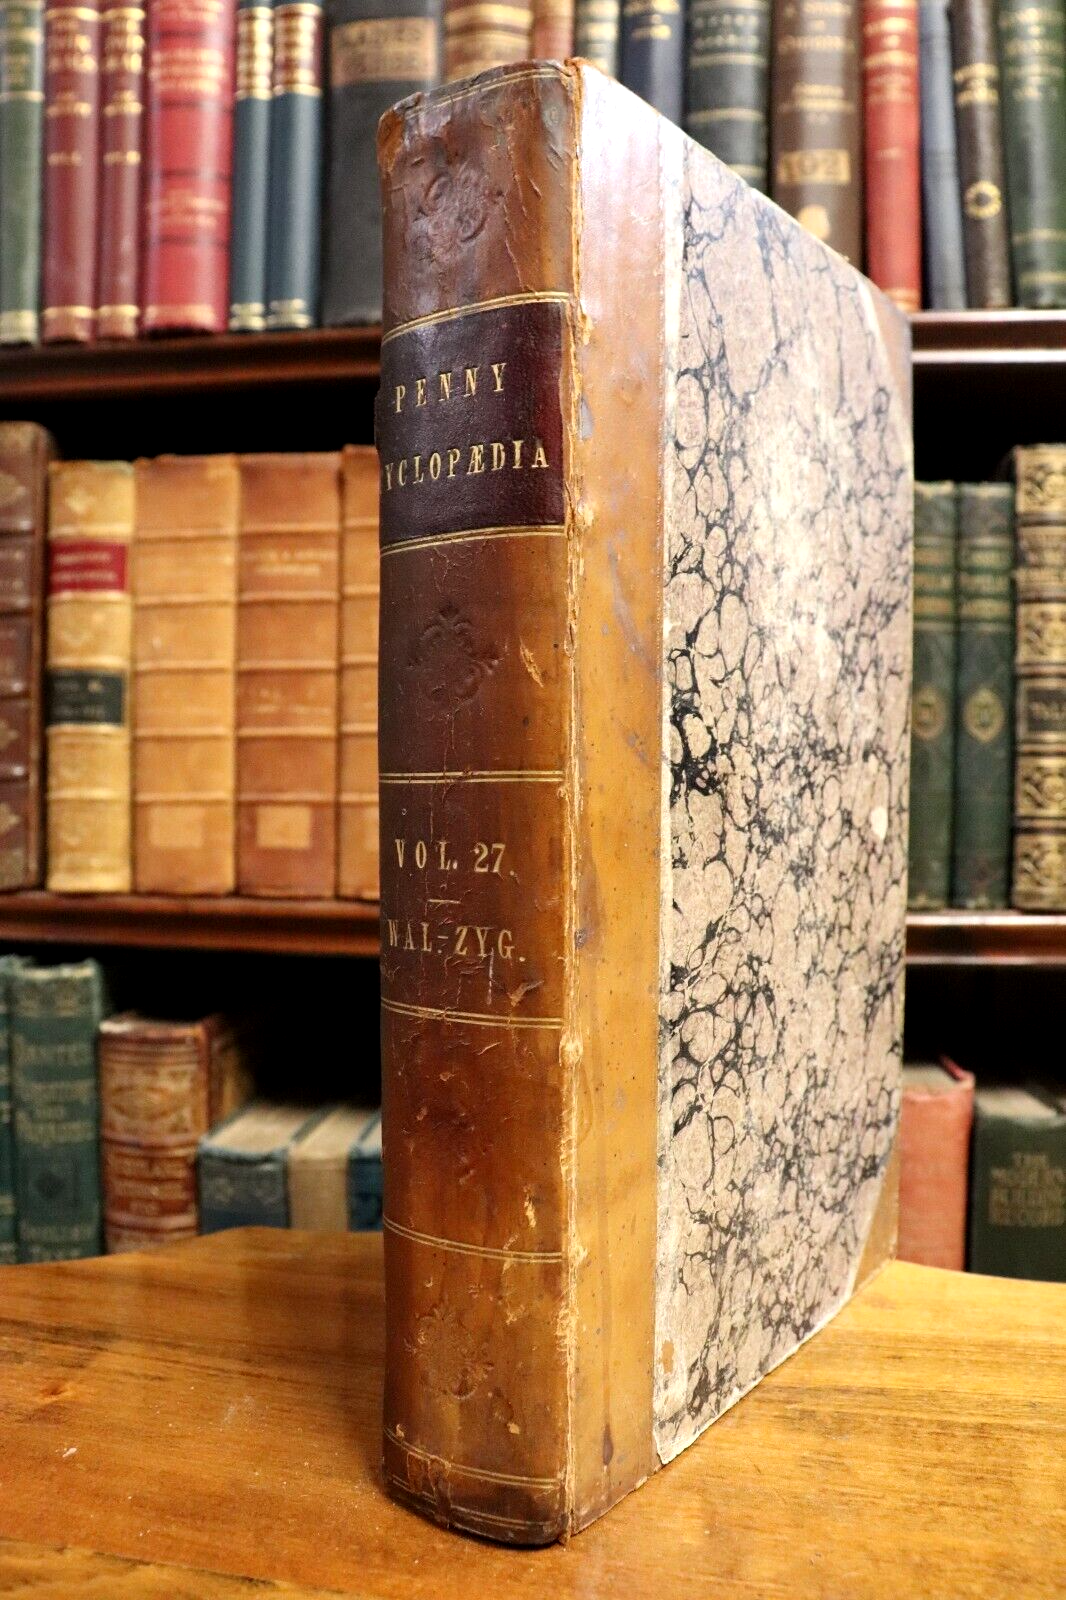 The Penny Cyclopaedia Vol. 27 - 1843 - Antique History Book